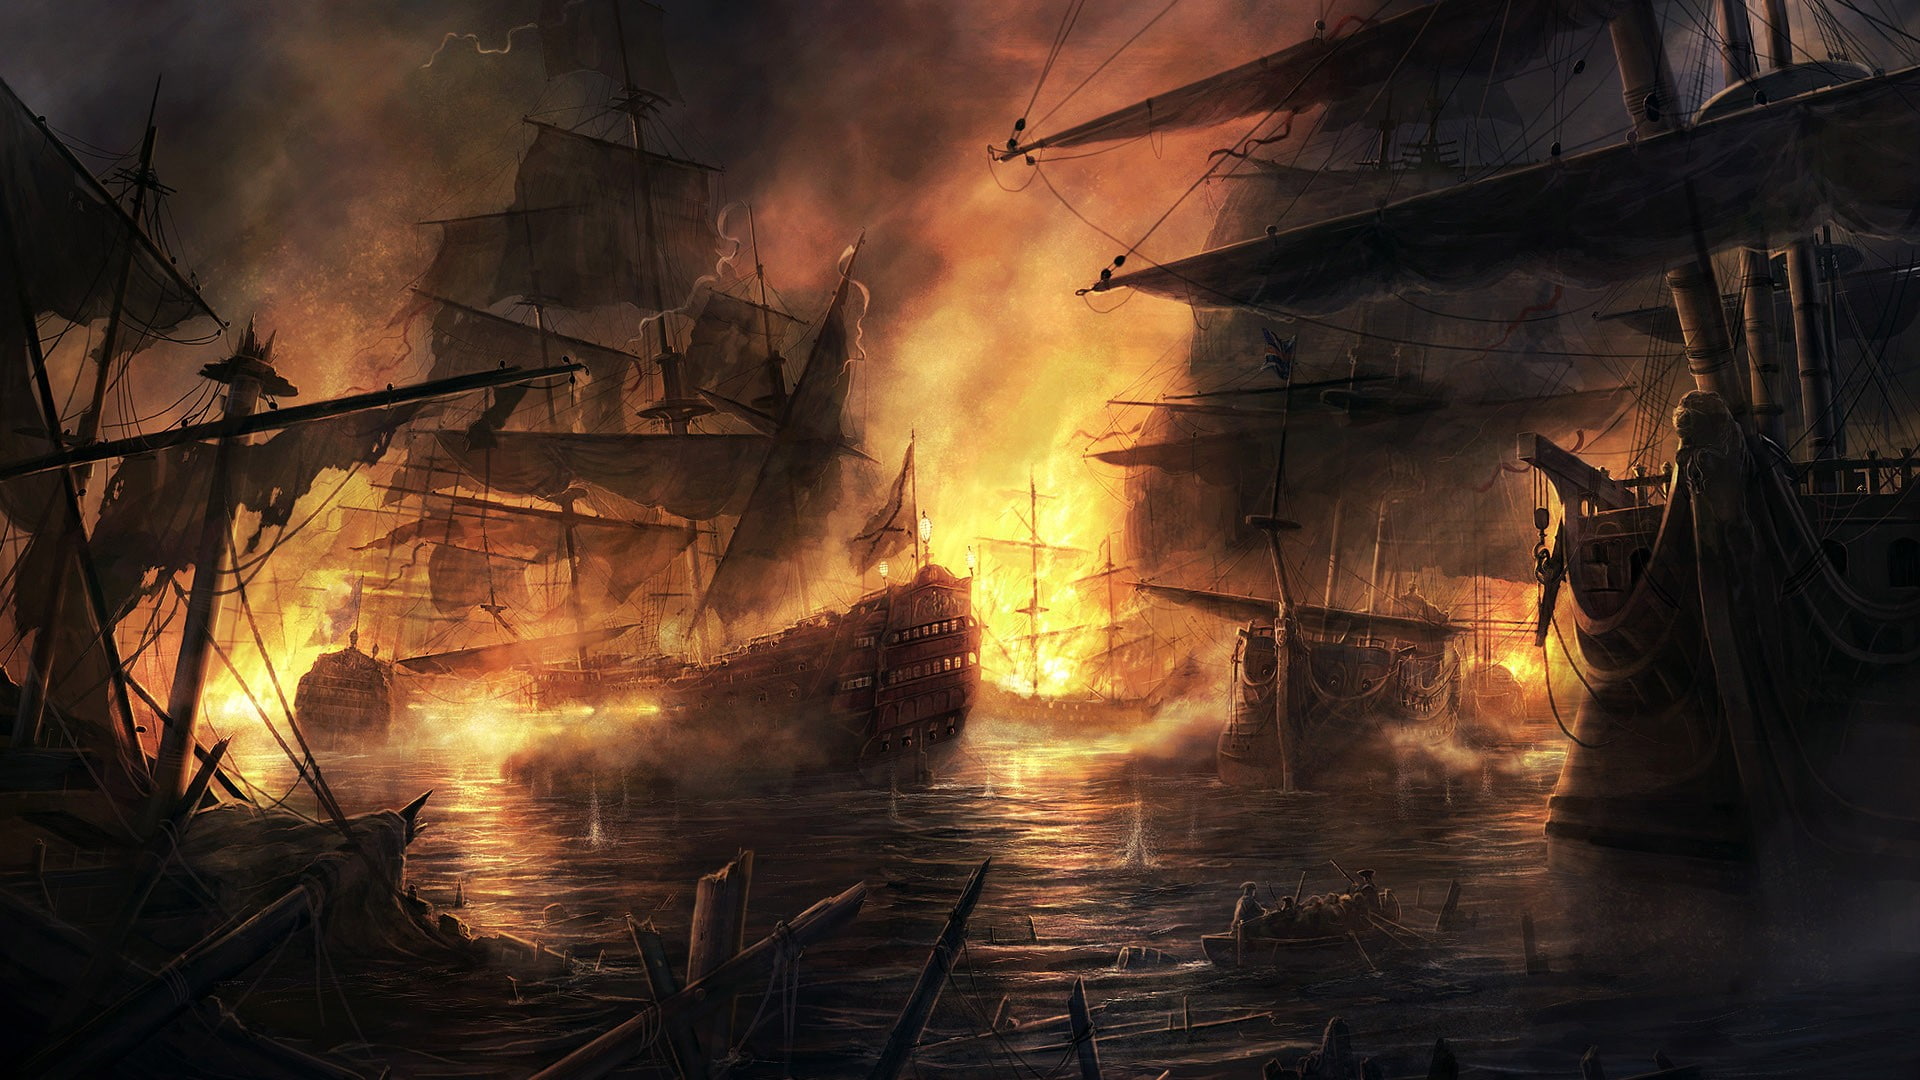 Empire: Total War, fire, sailing ship, cannons, smoke, armada